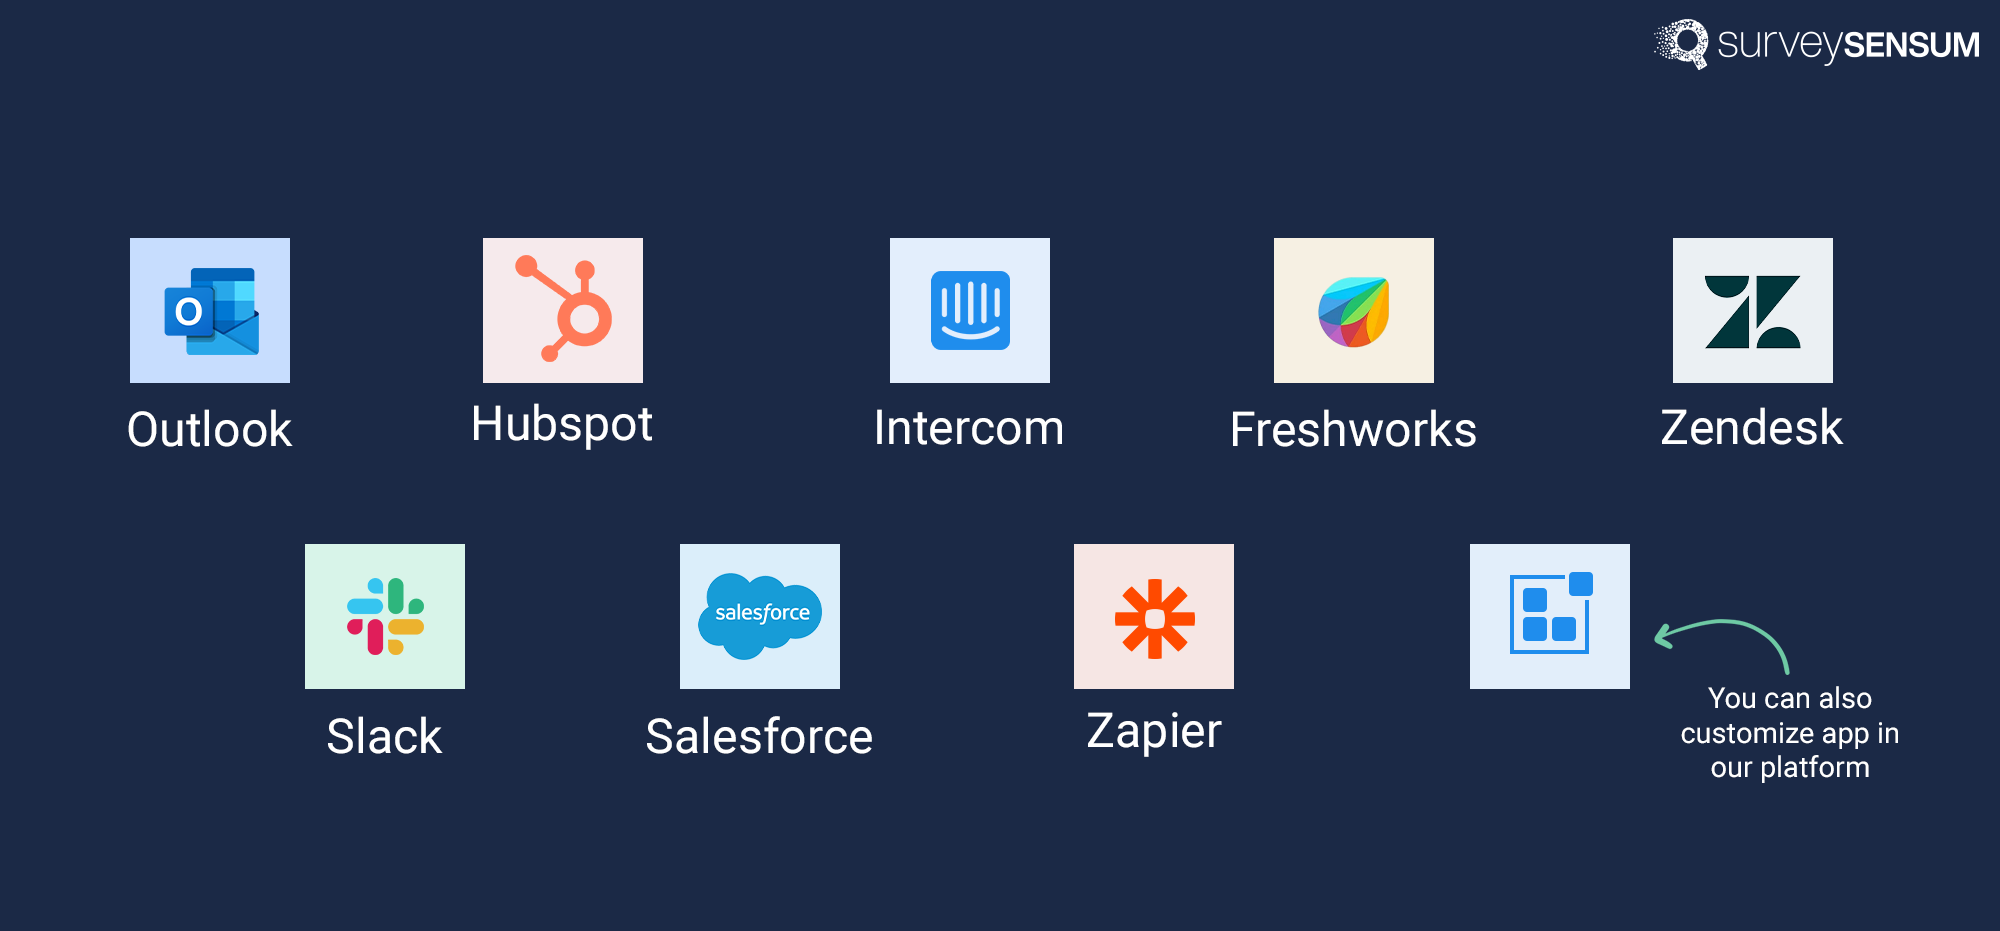 An image that shows how SurveySensum integrates with several popular software tools like Slack, Salesforce, Freshworks, etc.